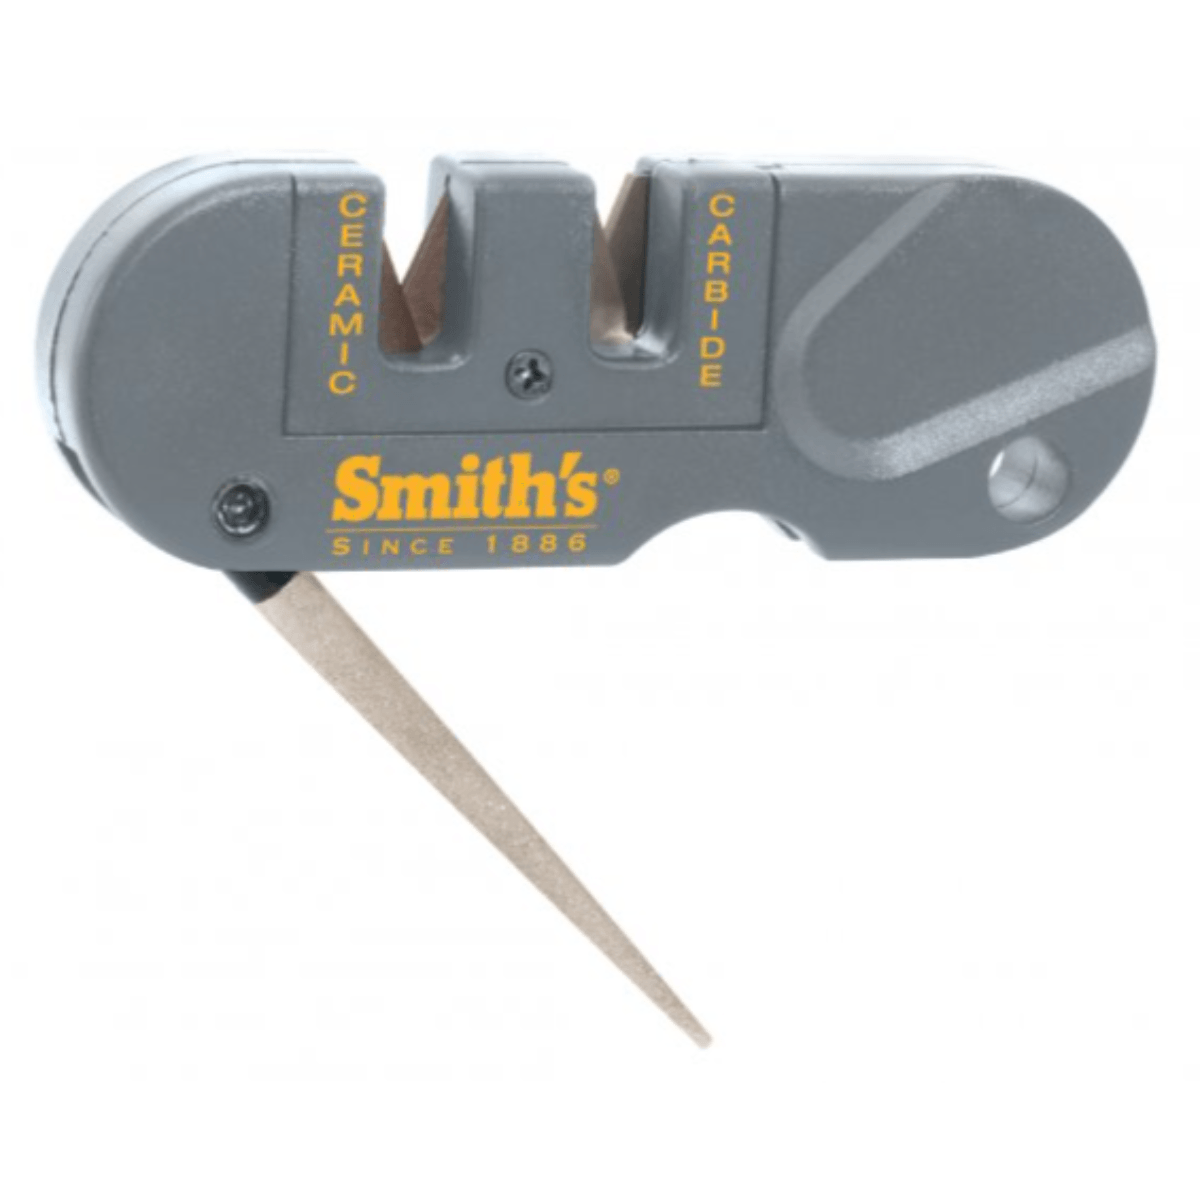 SMITH'S POCKET PAL PP1 KNIFE SHARPENER GRAY